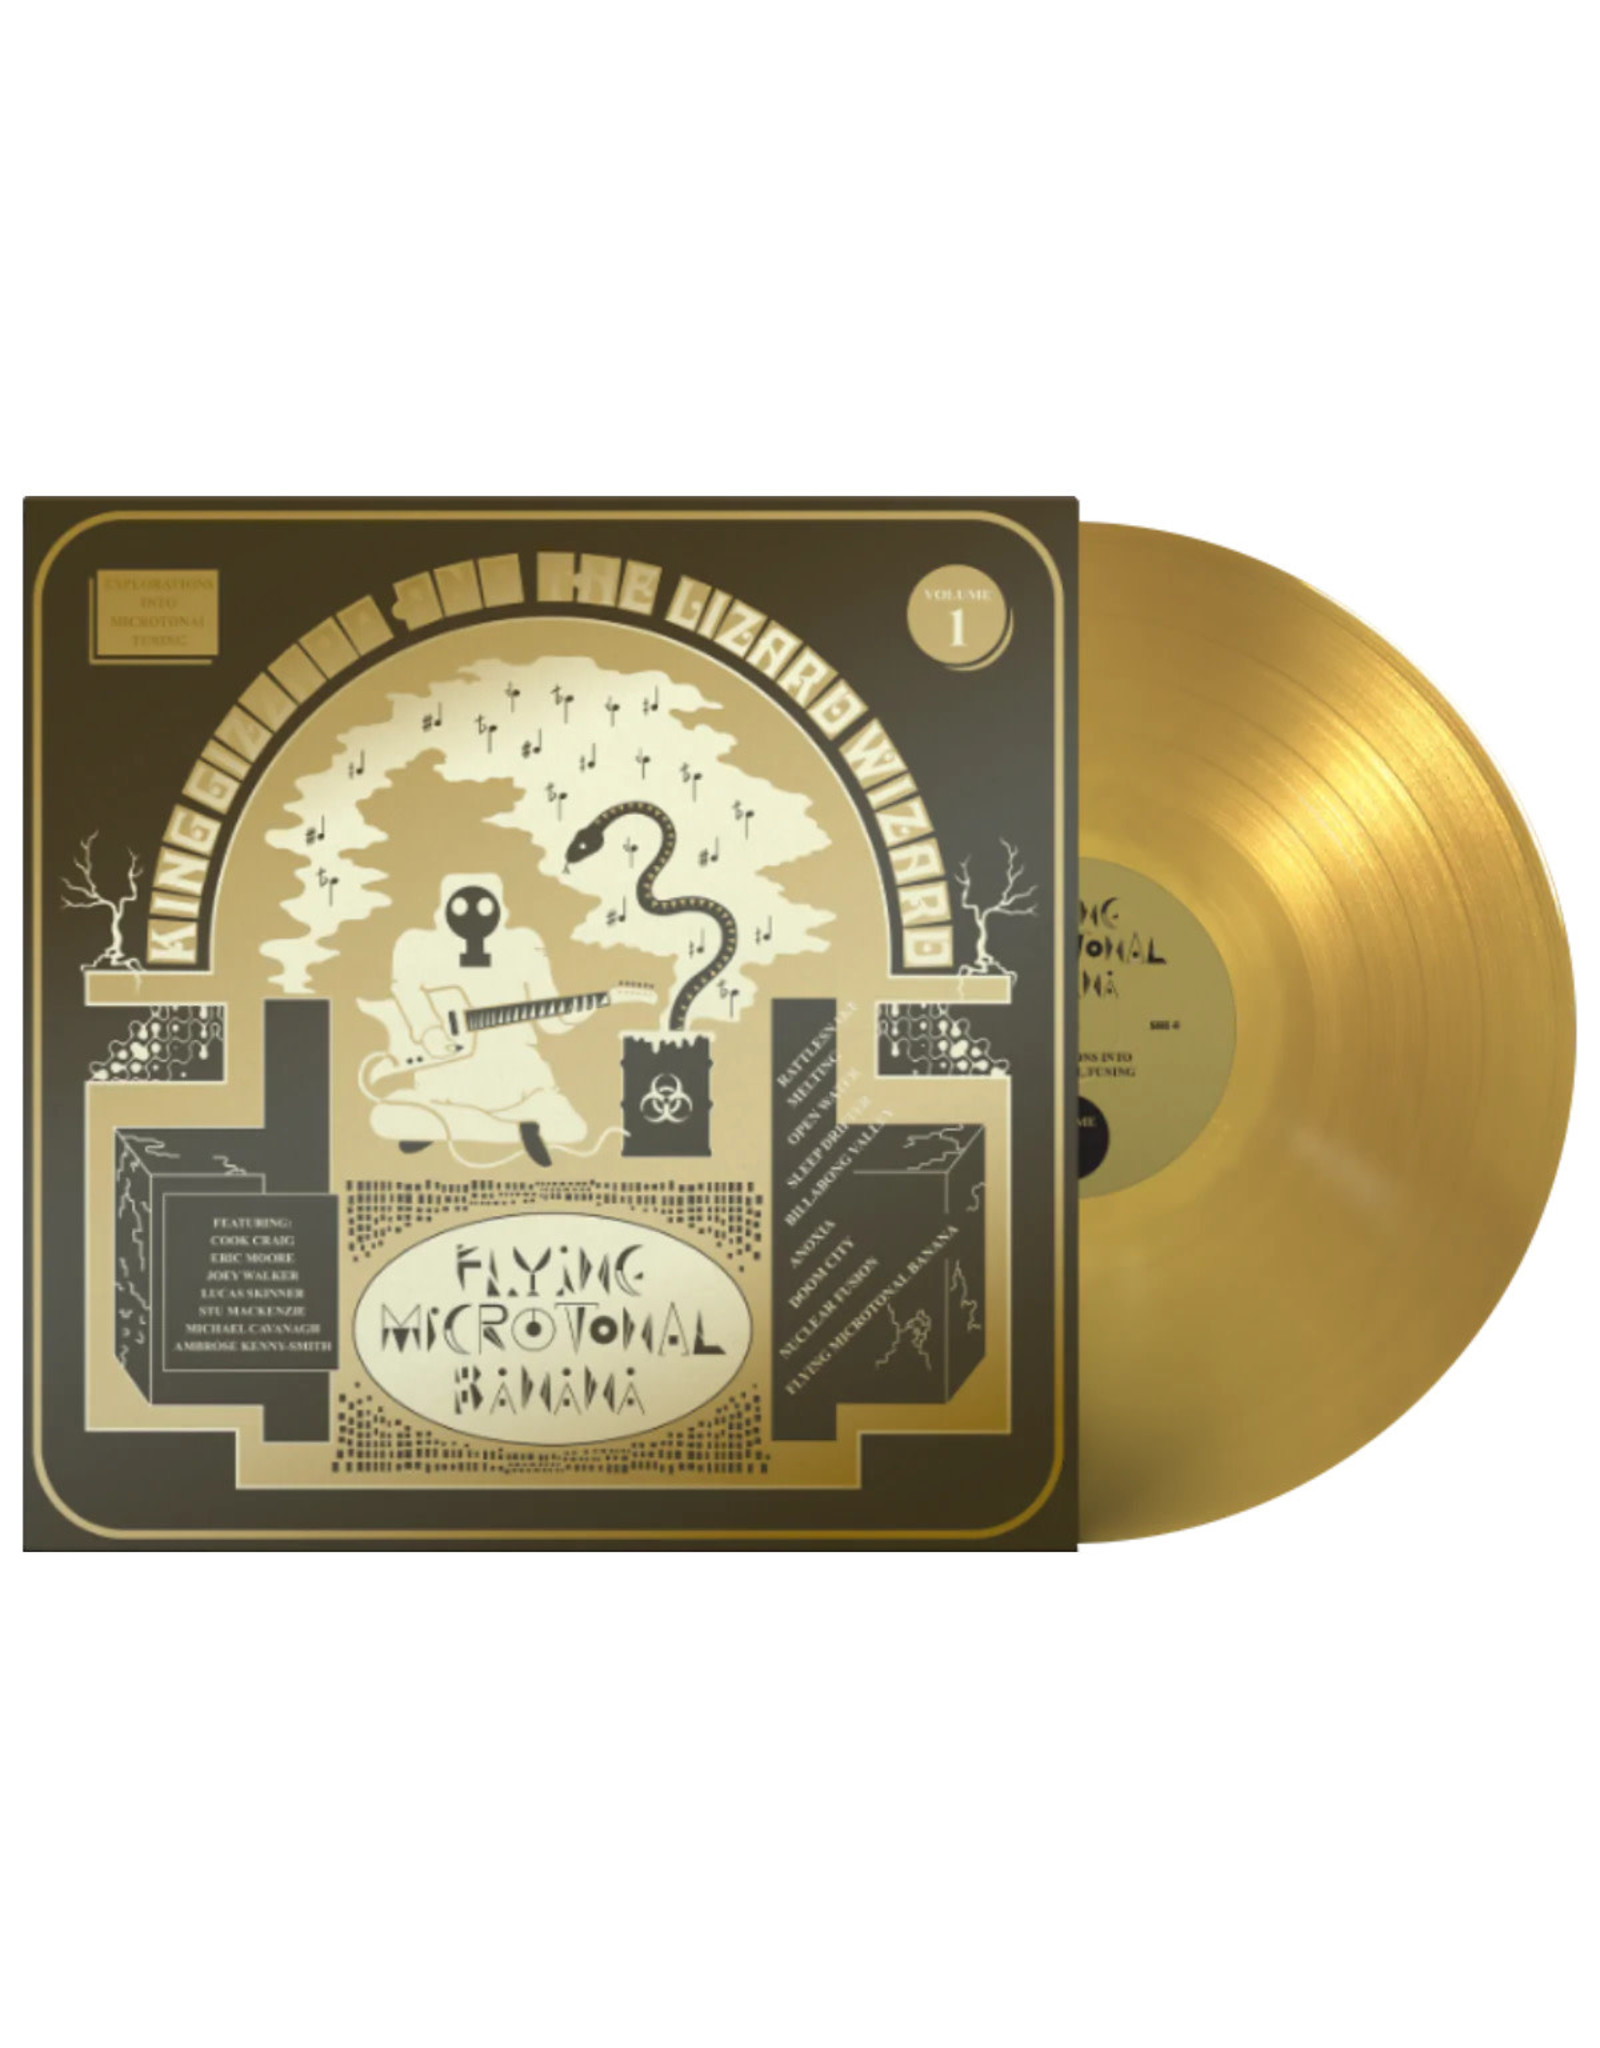 ATO King Gizzard & the Lizard Wizard: Flying Microtonal Banana (5th Ann.) (Golden Rattlesnake Ed.) (gold & bone) LP